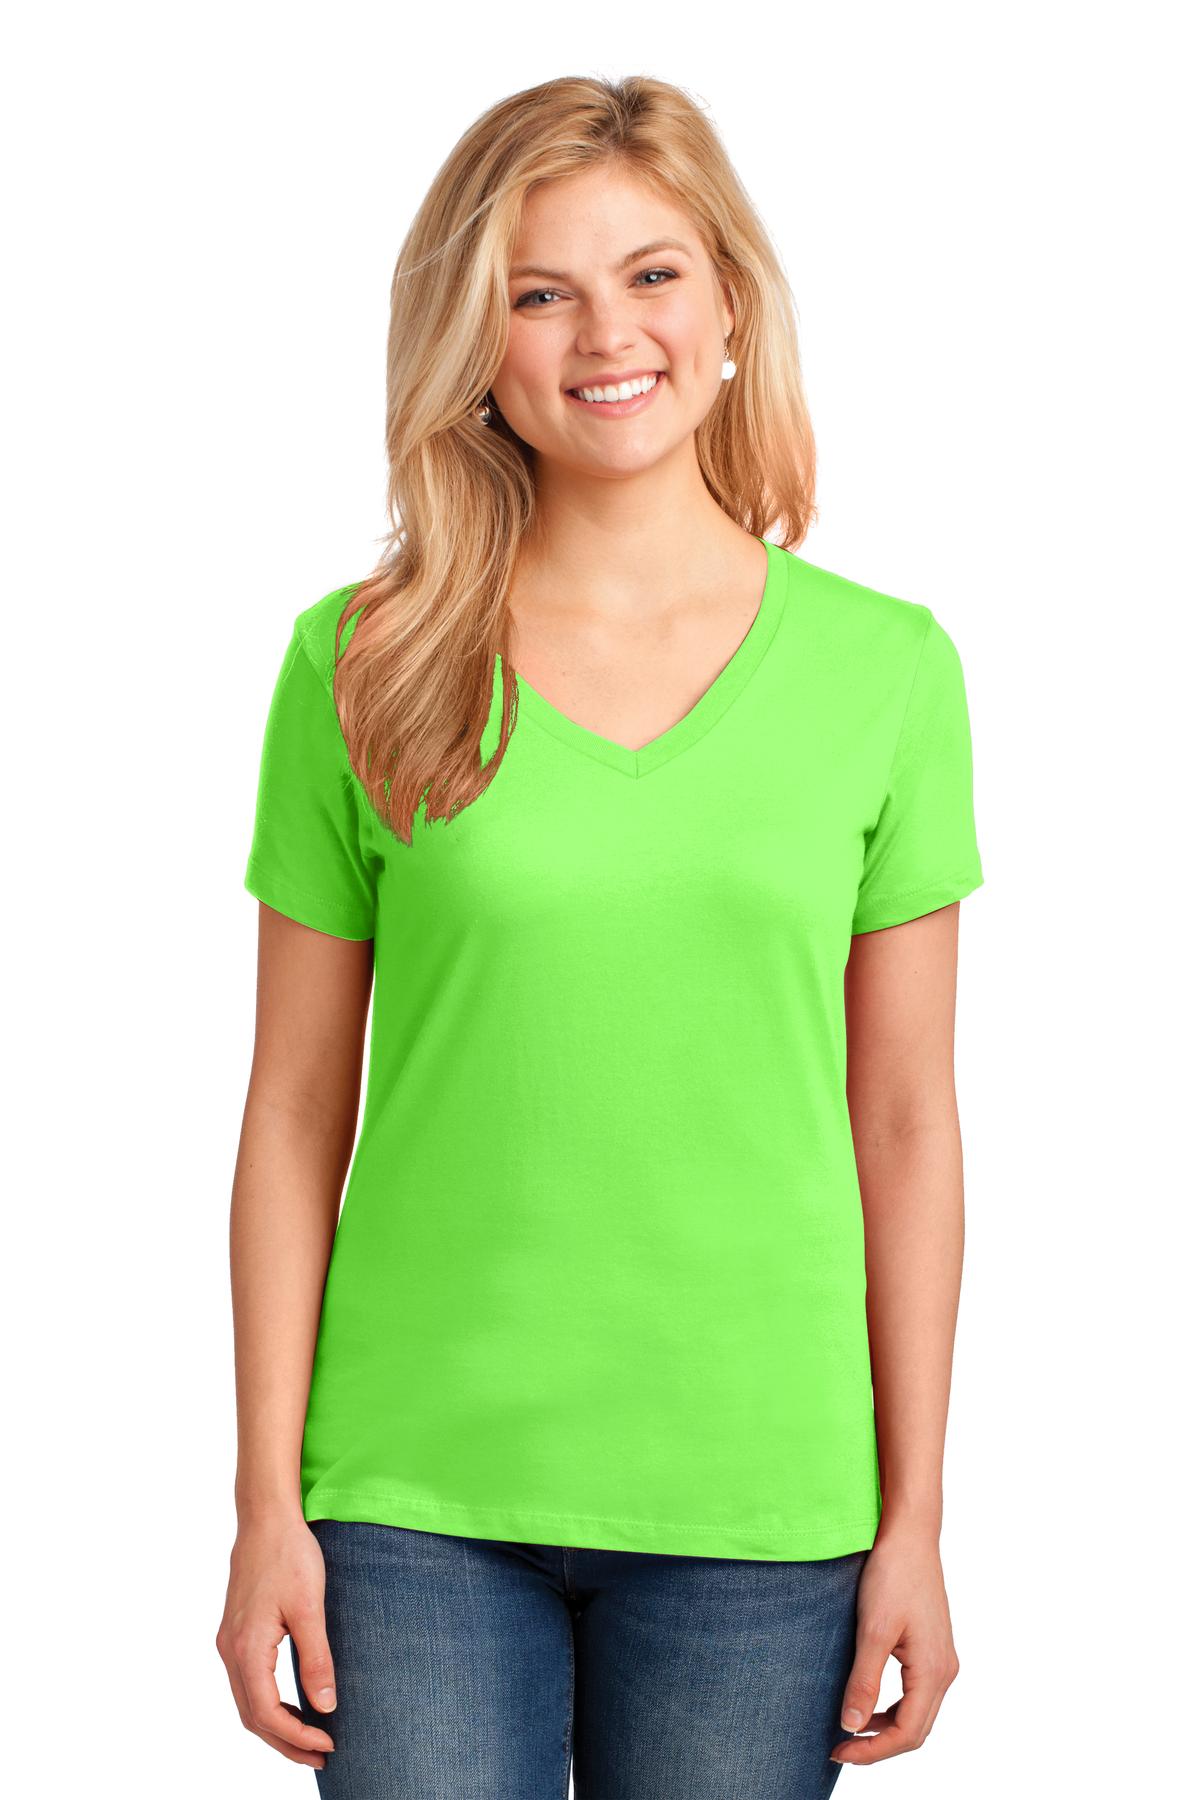 Photo of Port & Company Ladies LPC54V  color  Neon Green